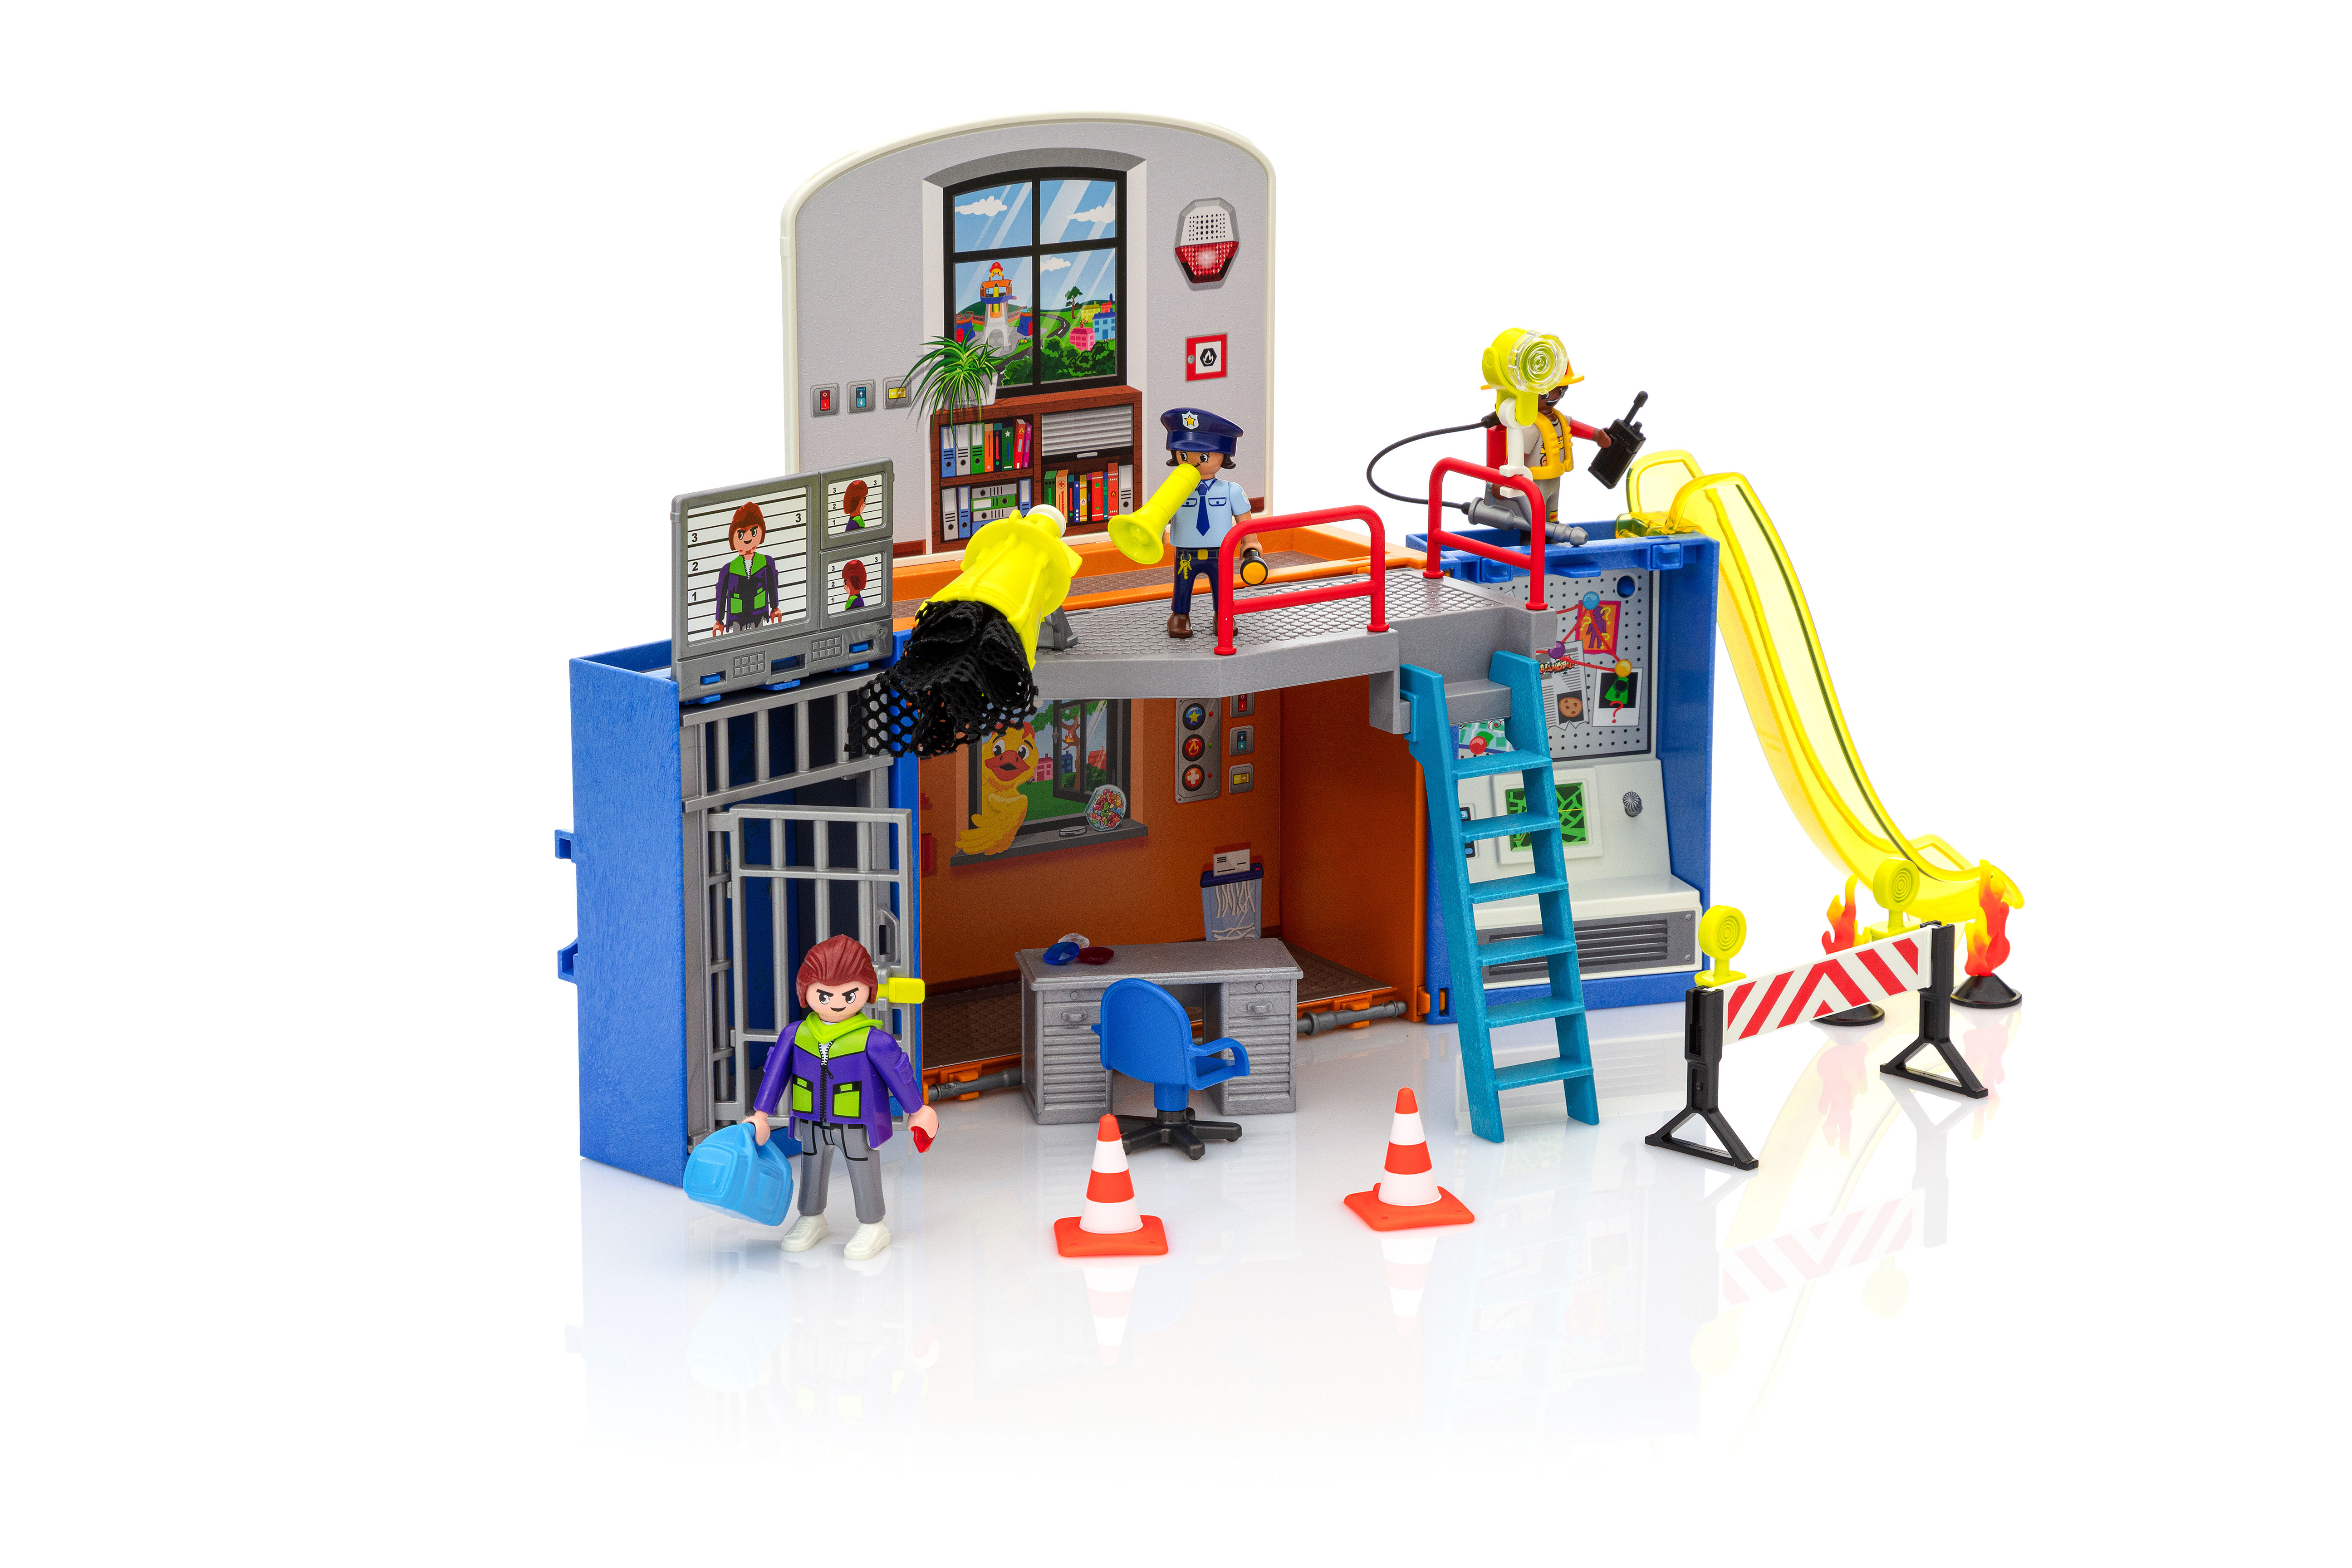 70830 - Playmobil Duck On Call - Centre opération mobile Playmobil : King  Jouet, Playmobil Playmobil - Jeux d'imitation & Mondes imaginaires